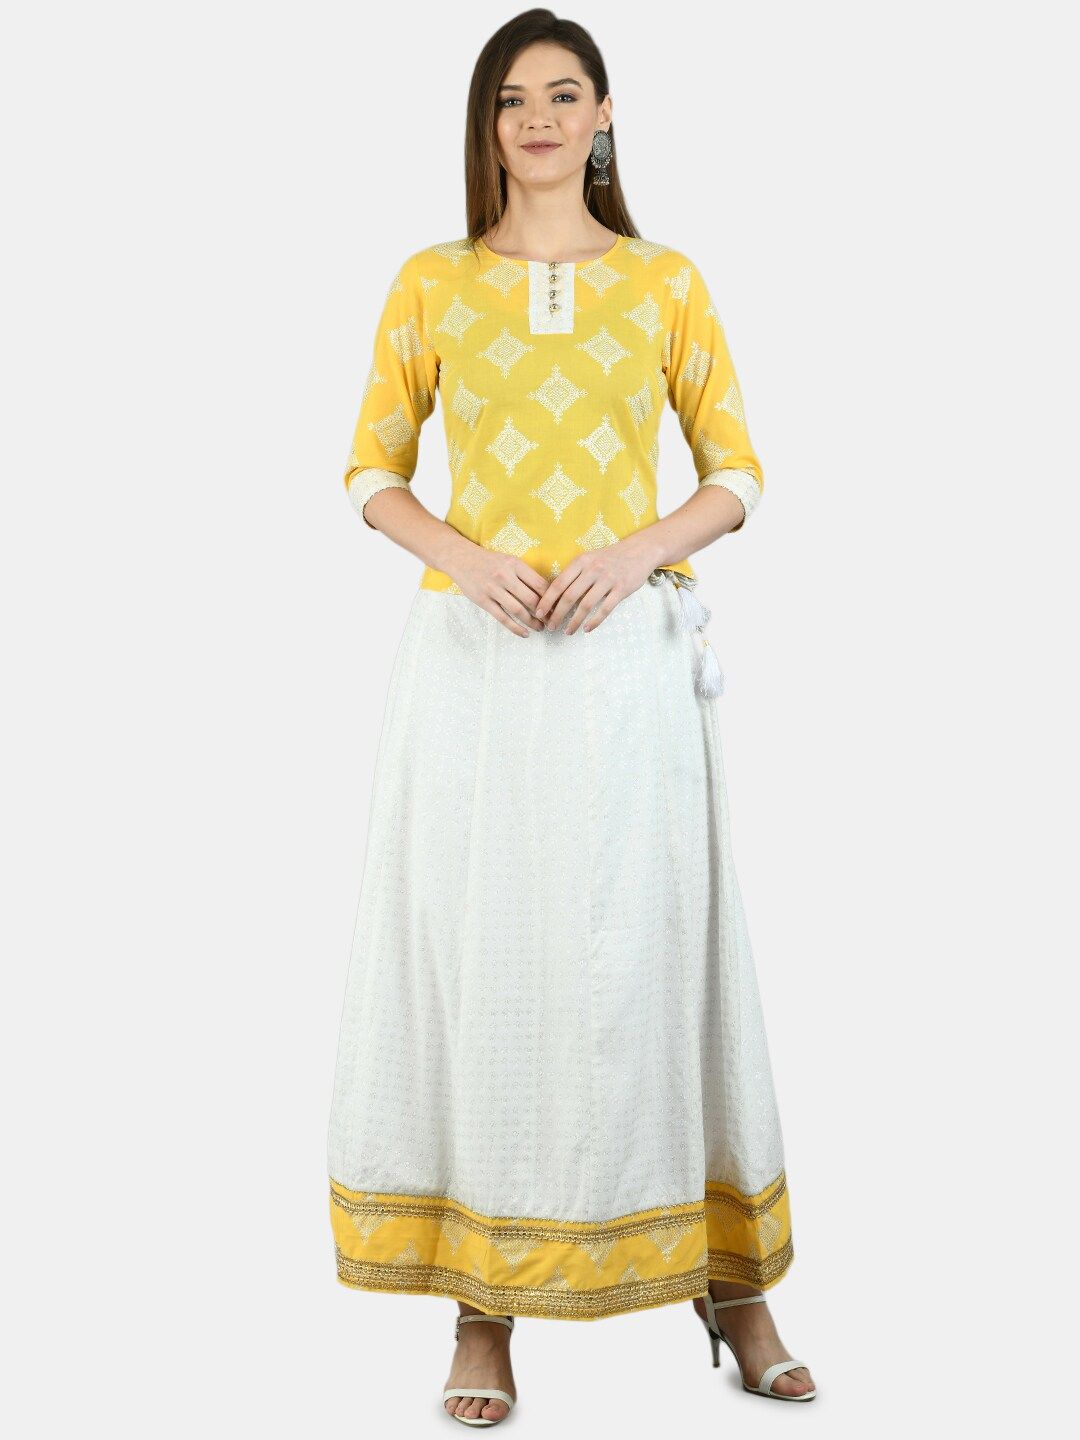 Myshka Yellow and White Ready-To-Wear Lehenga Choli Price in India